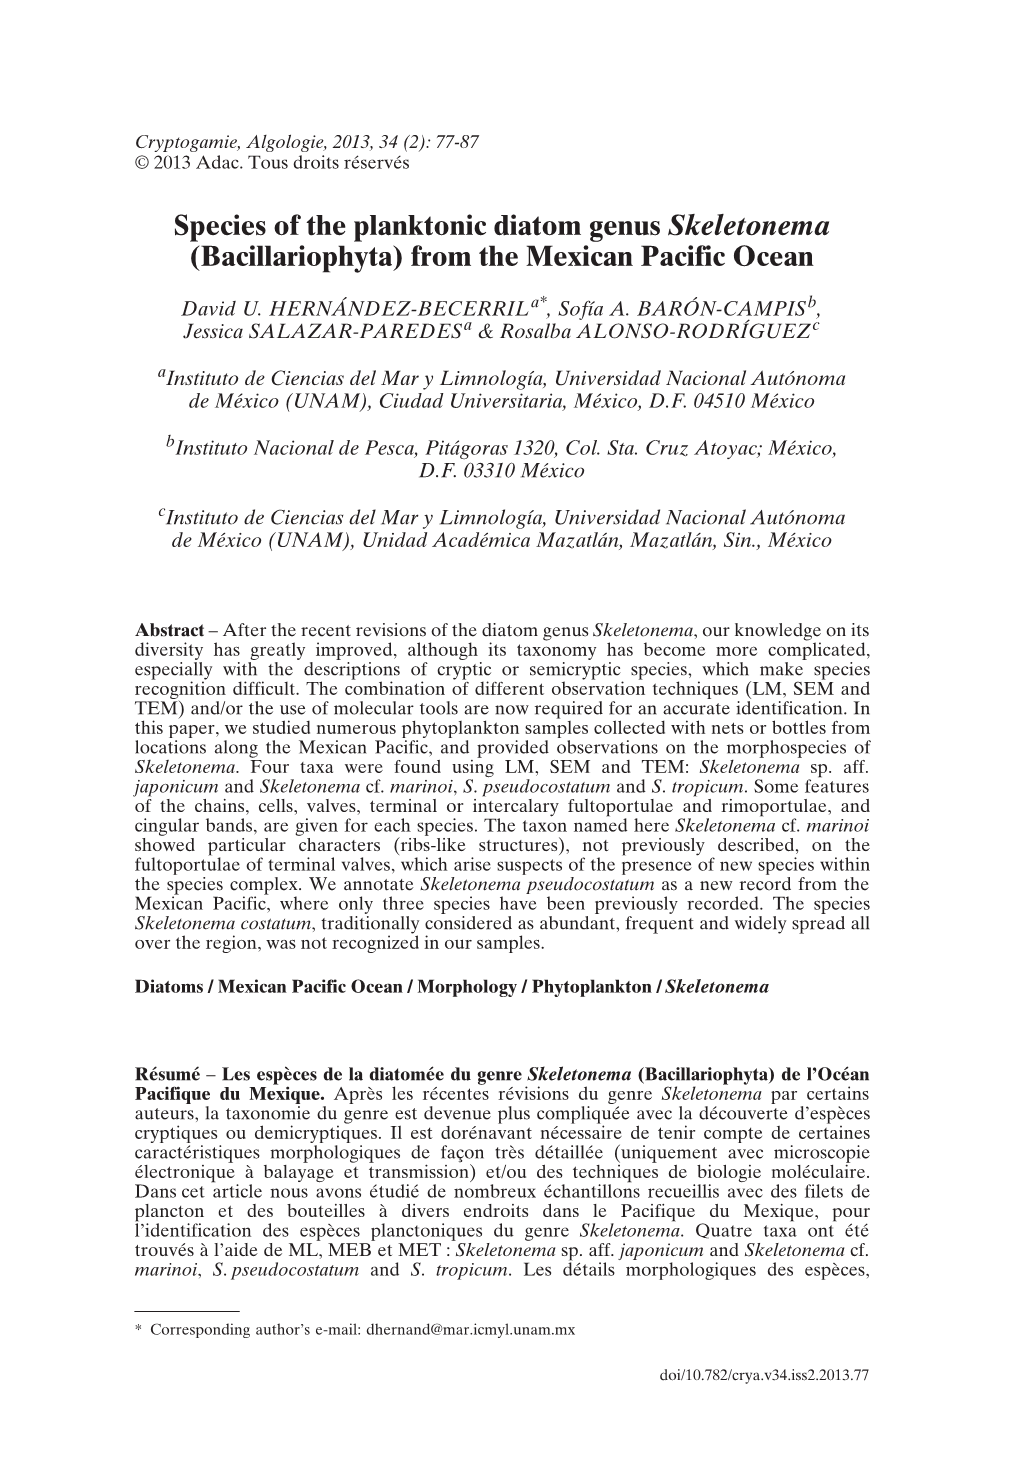 Species of the Planktonic Diatom Genus Skeletonema (Bacillariophyta) from the Mexican Pacific Ocean